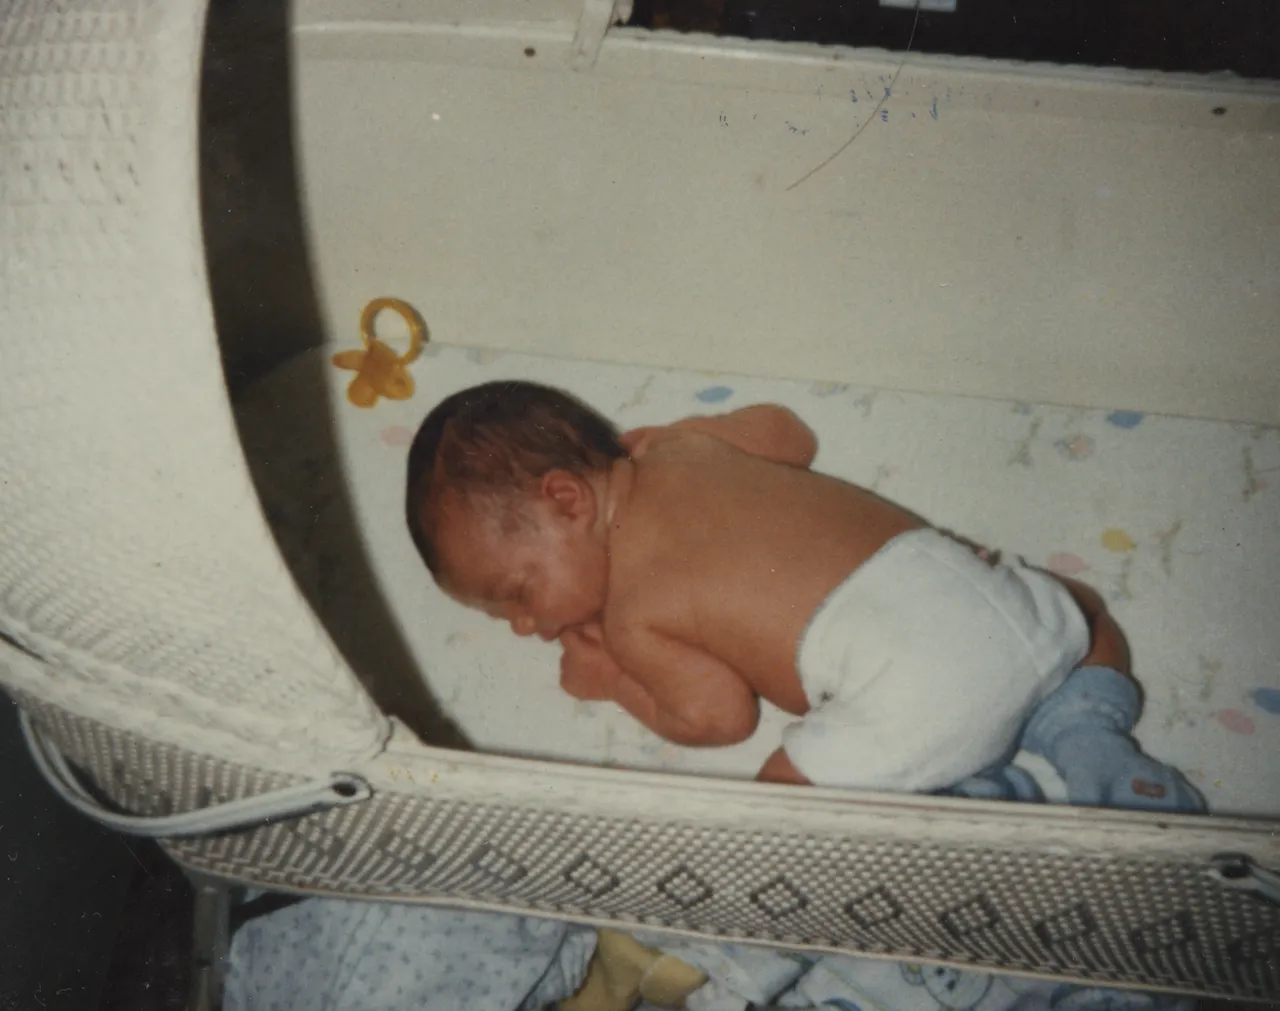 1985-02-11 Joey Arnold Newborn 06 Hospital Crib Laying.png